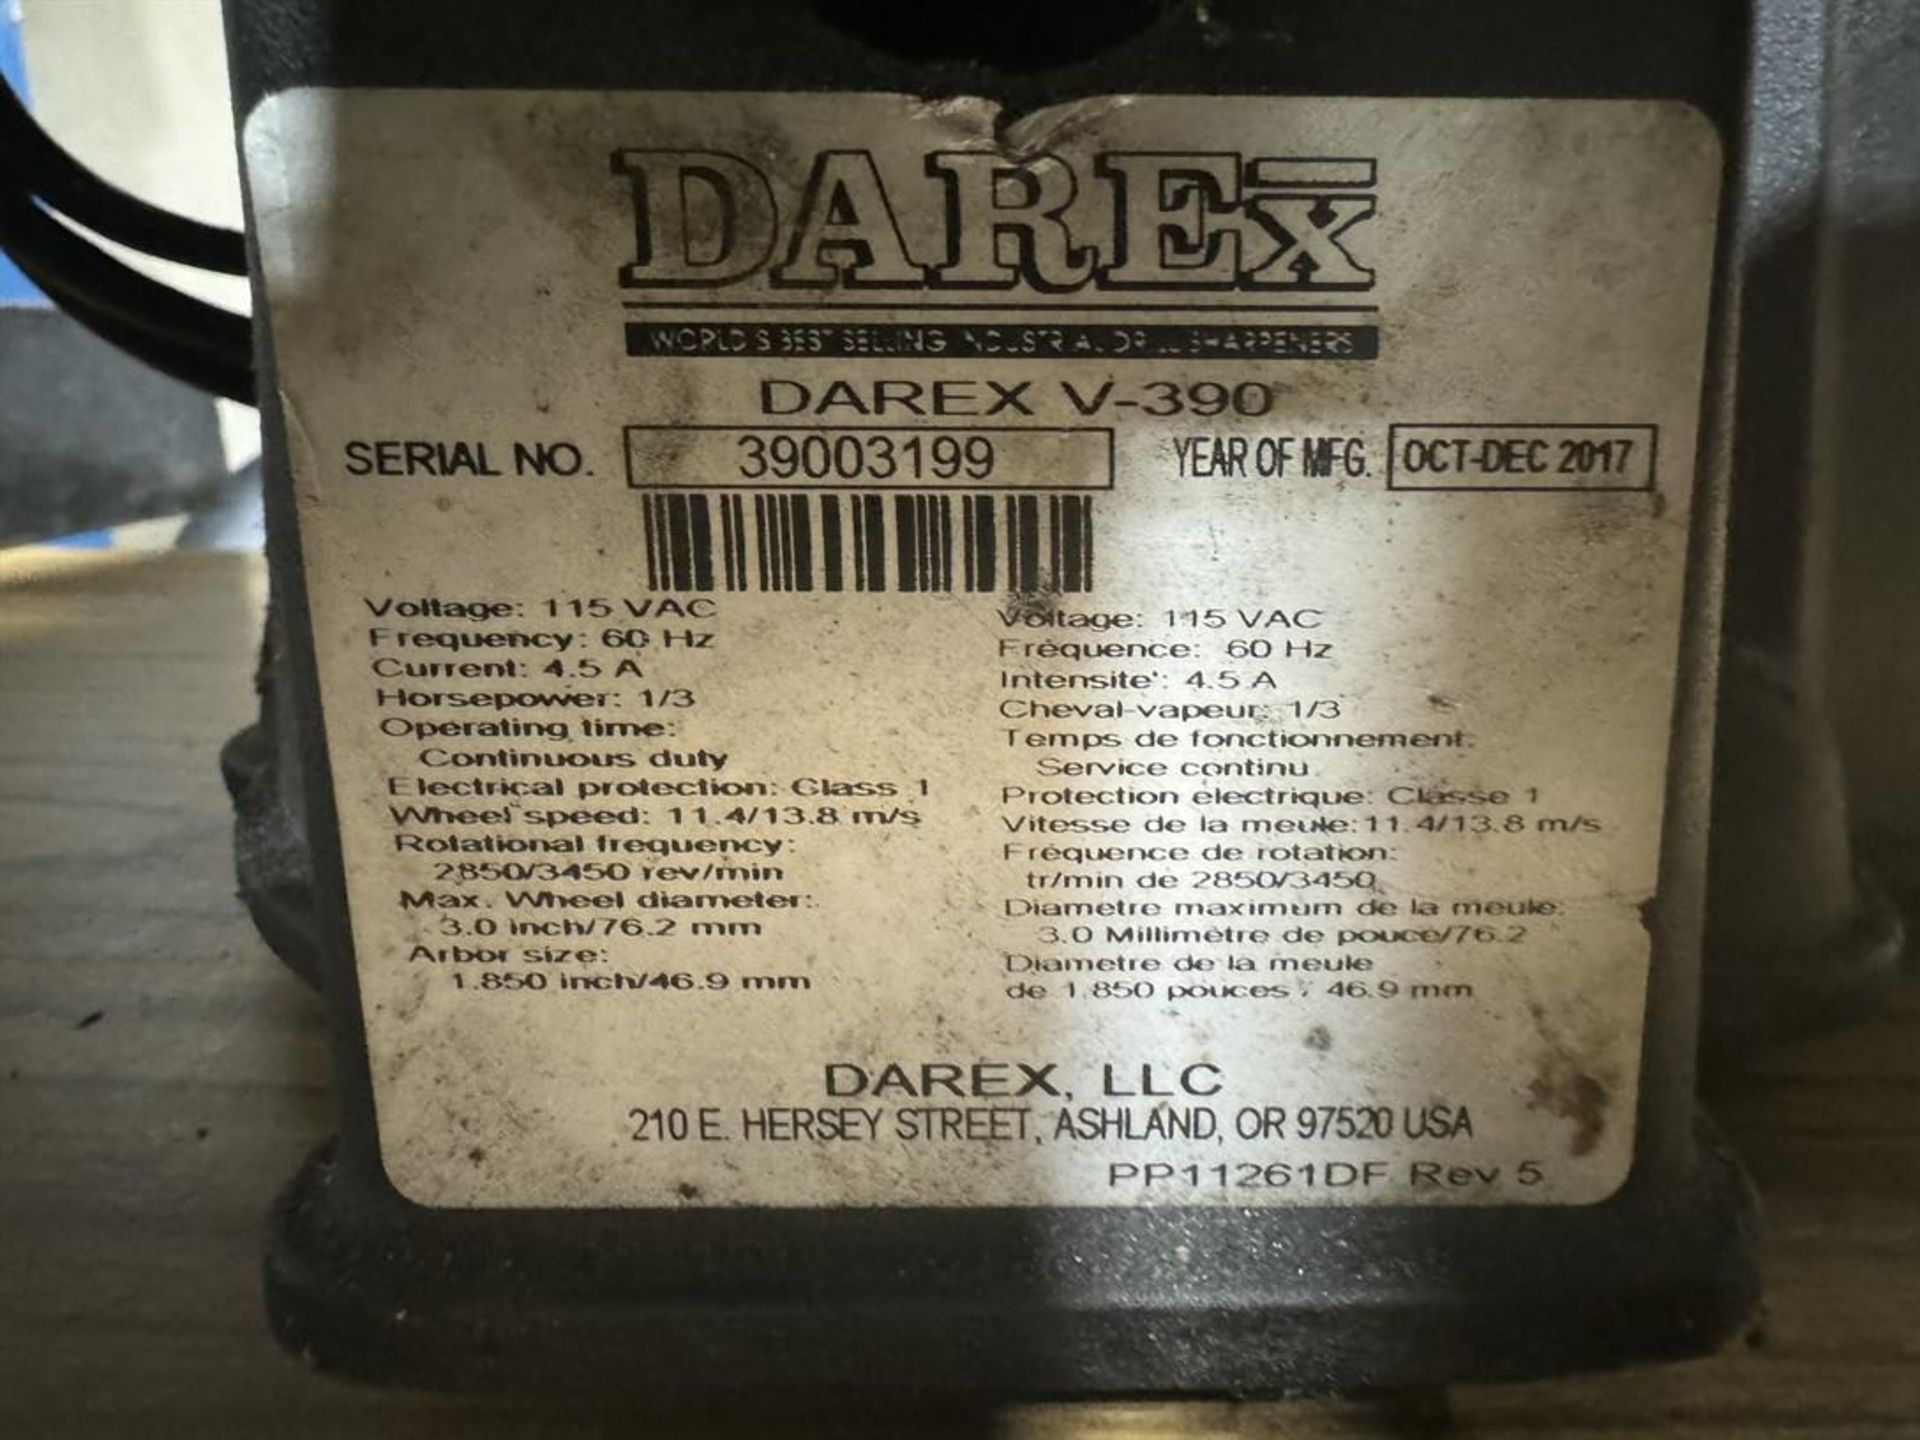 DAREX V-390 Drill Sharpener, s/n 39003199 - Image 4 of 4